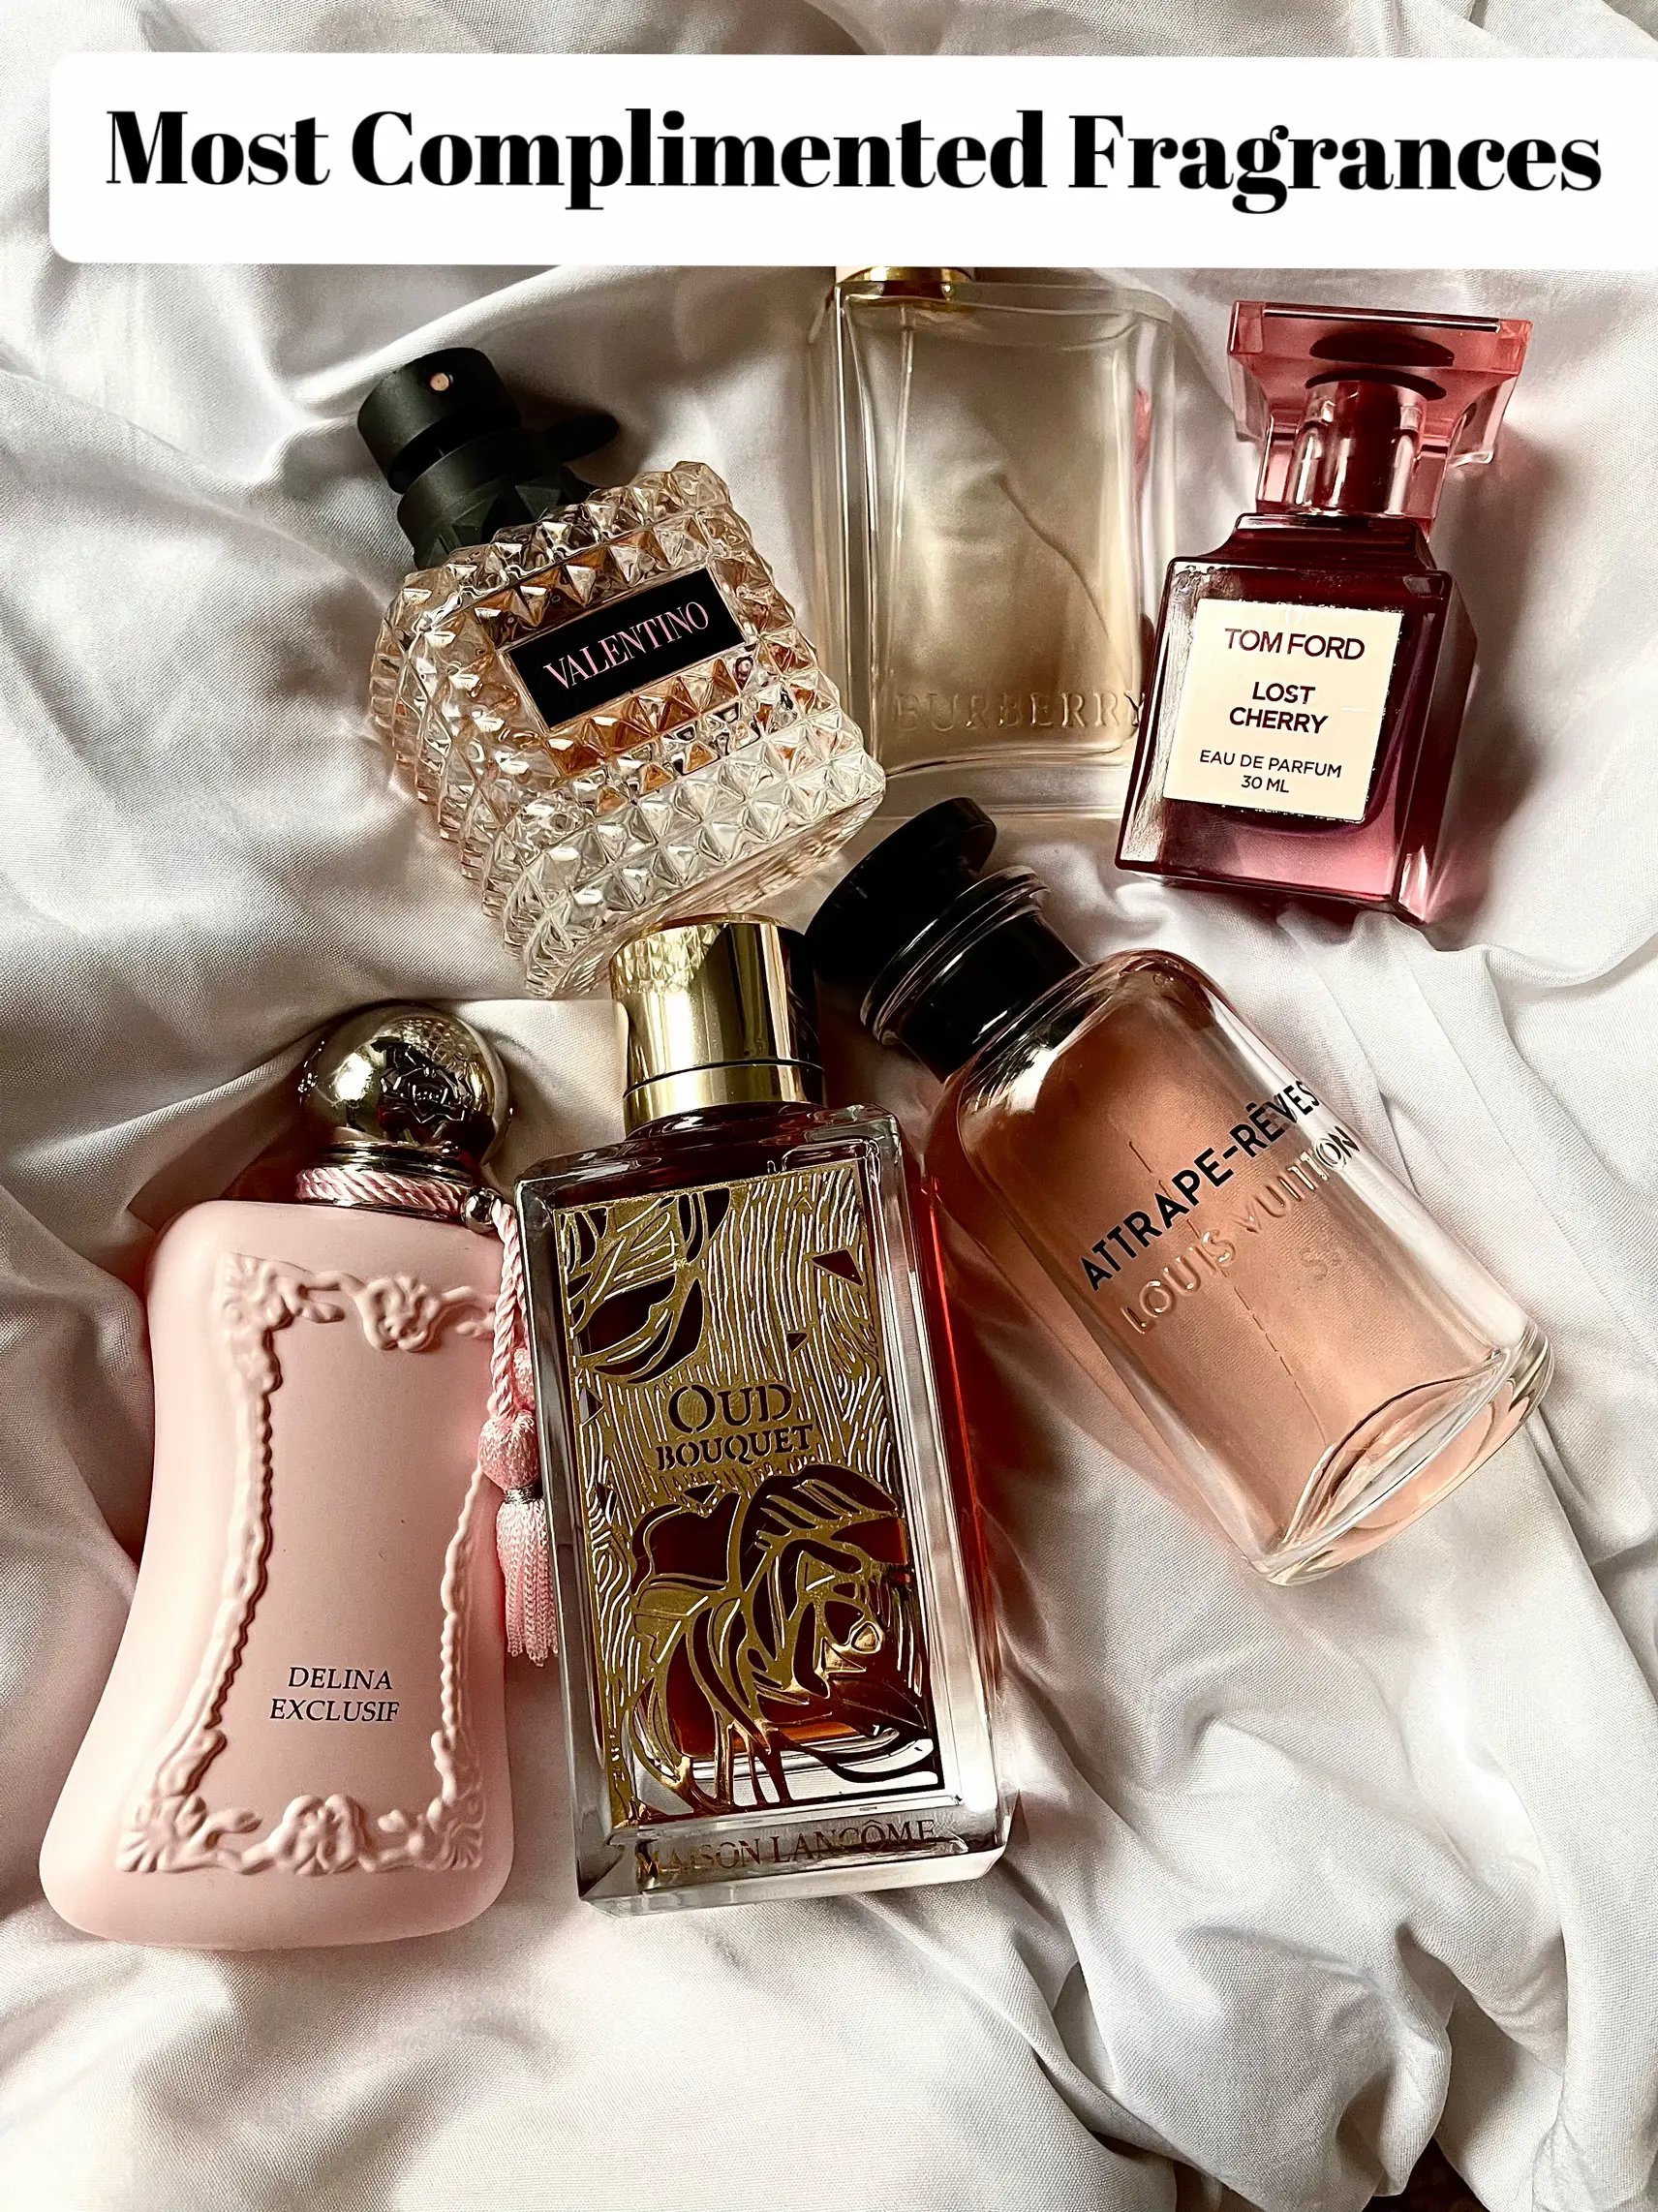 Louis Vuitton Attrape Reves Eau de Perfume For Women, 200 ml : :  Beauty